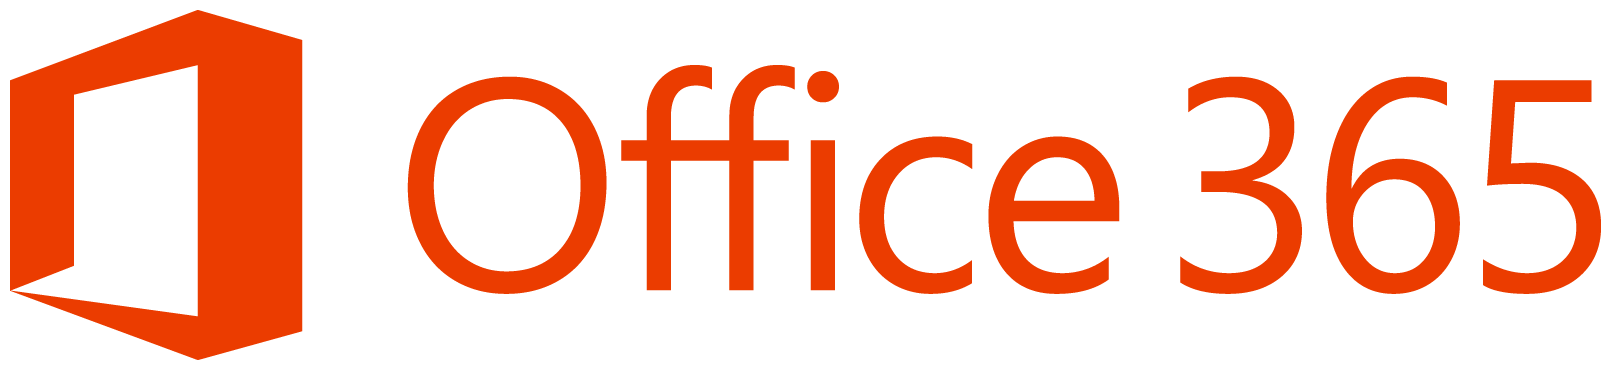 Microsoft Office 365 Logo - Office 365 logo.png